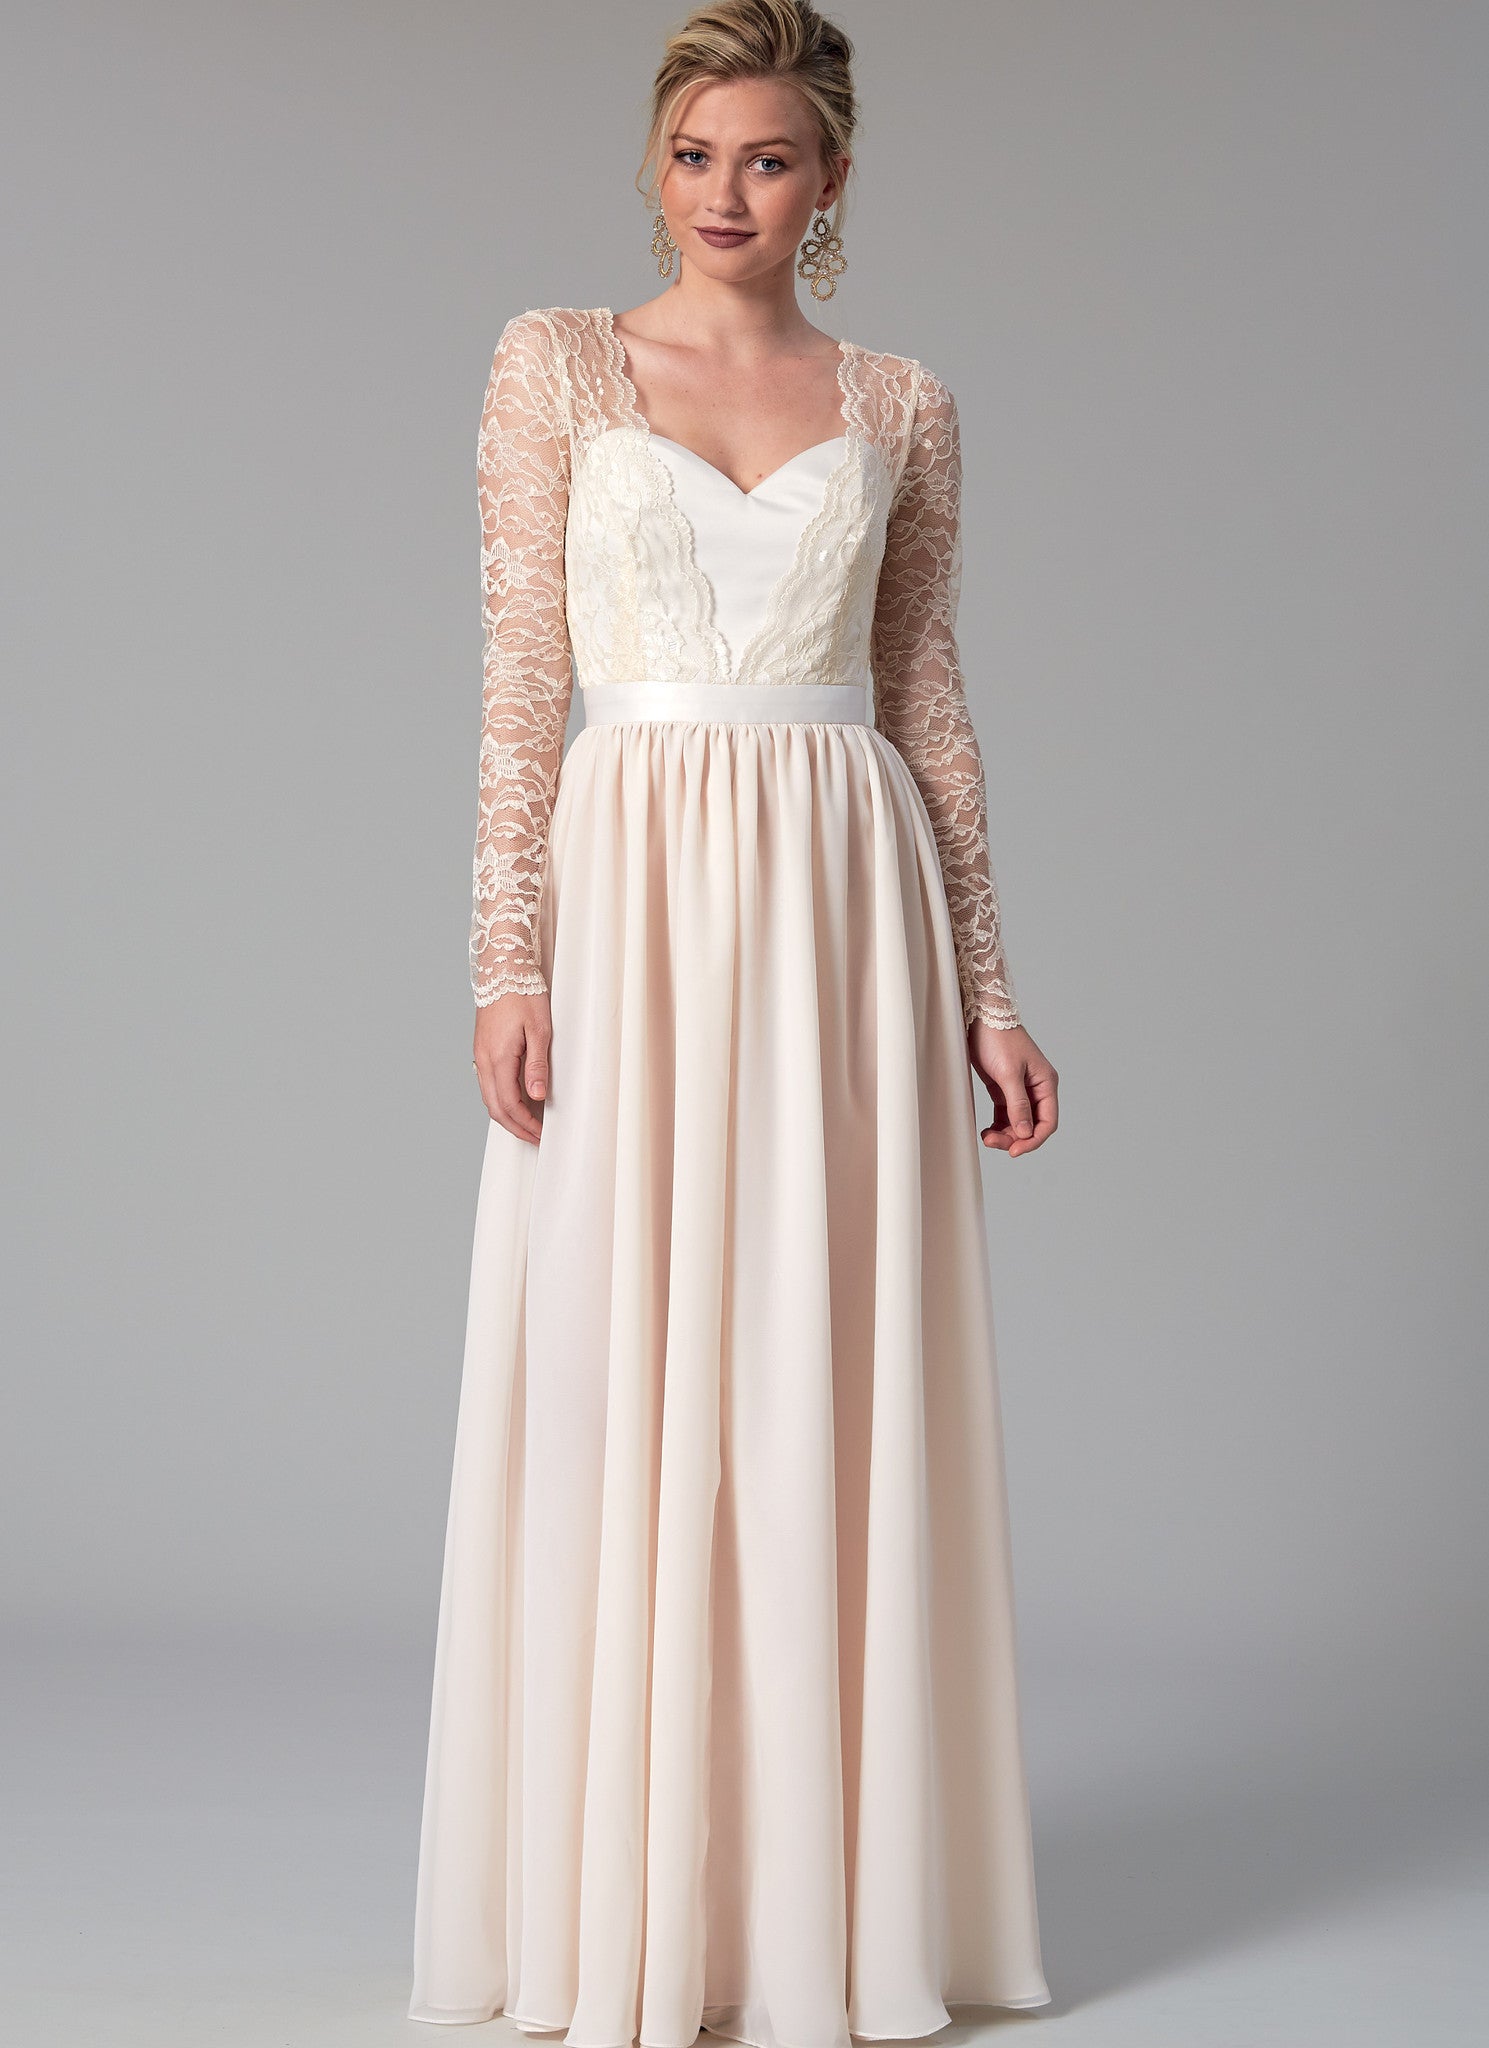 M7507 Misses' Mix-and-Match Sweetheart Bridal Dresses — jaycotts.co.uk ...